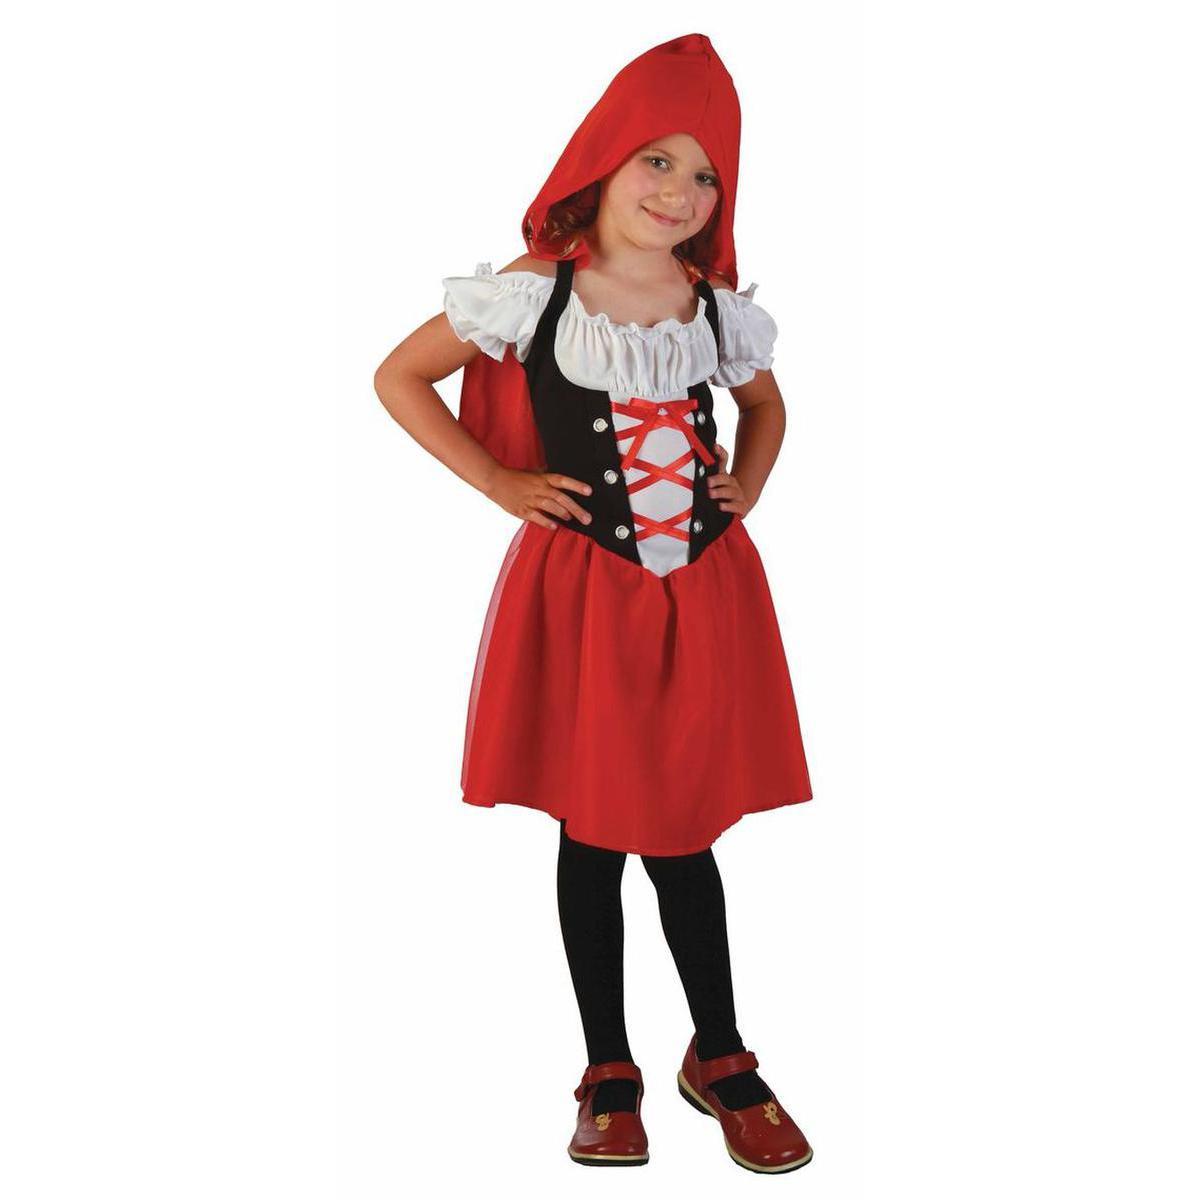 Costume enfant chaperon rouge en polyester - M - Rouge